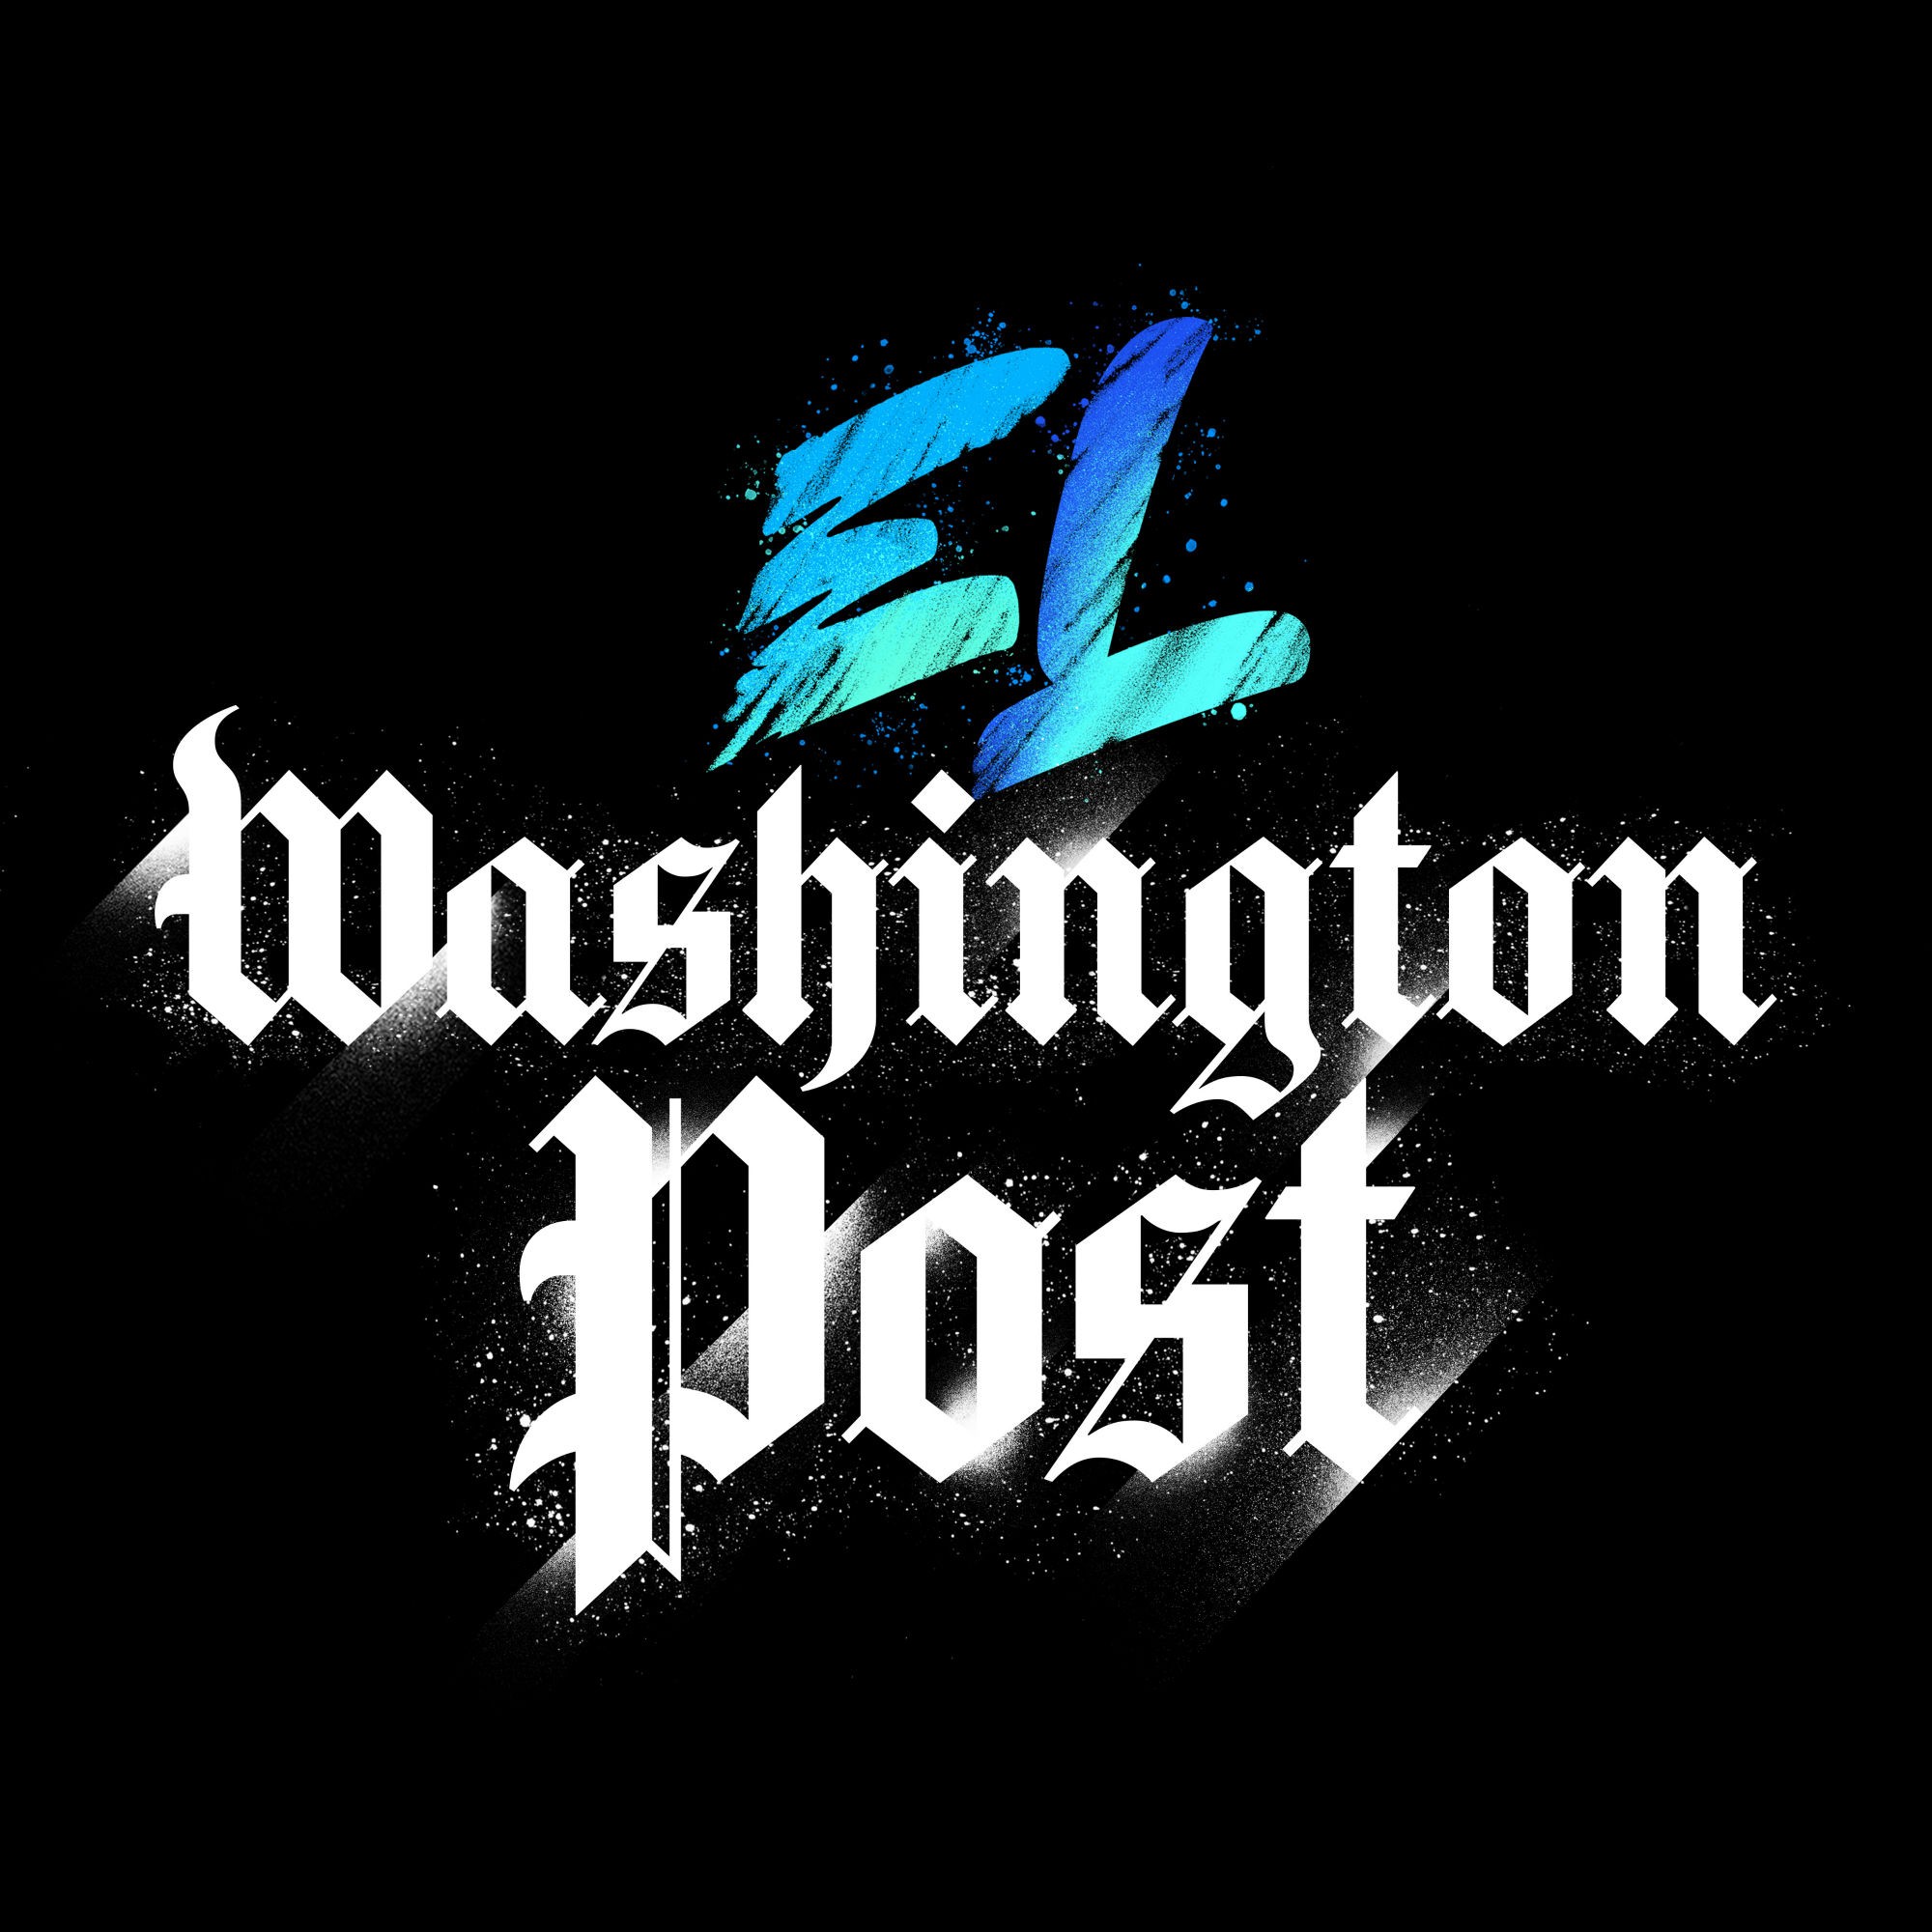 Washington post